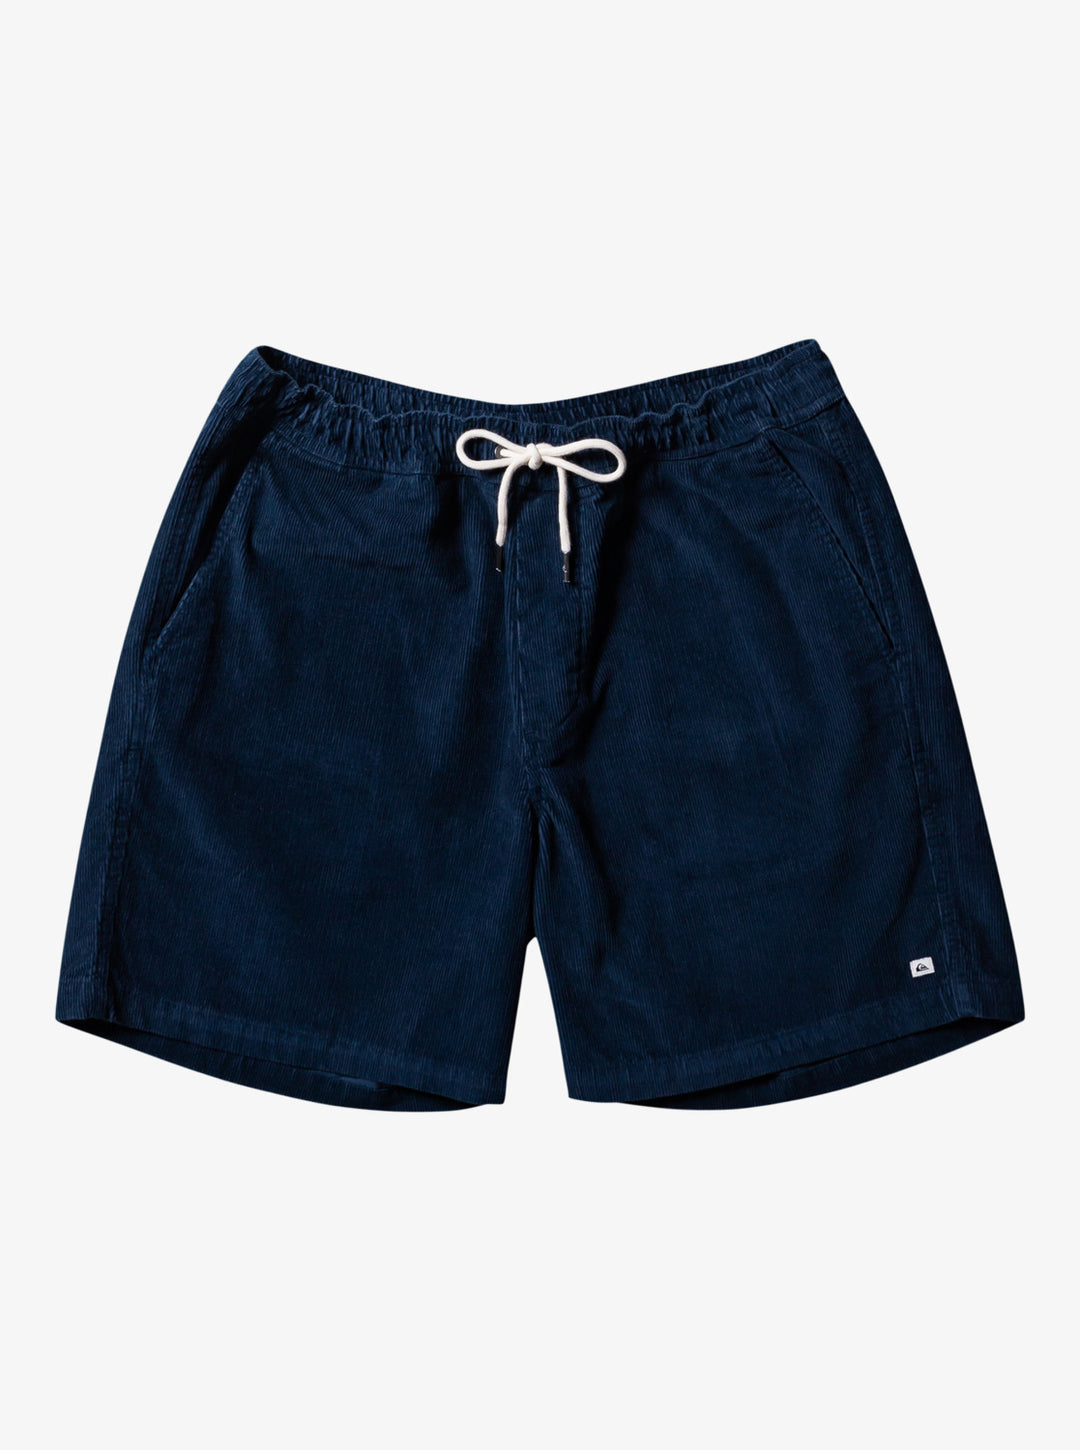 Quiksilver Taxer Cord Shorts - Midnight Navy - Sun Diego Boardshop